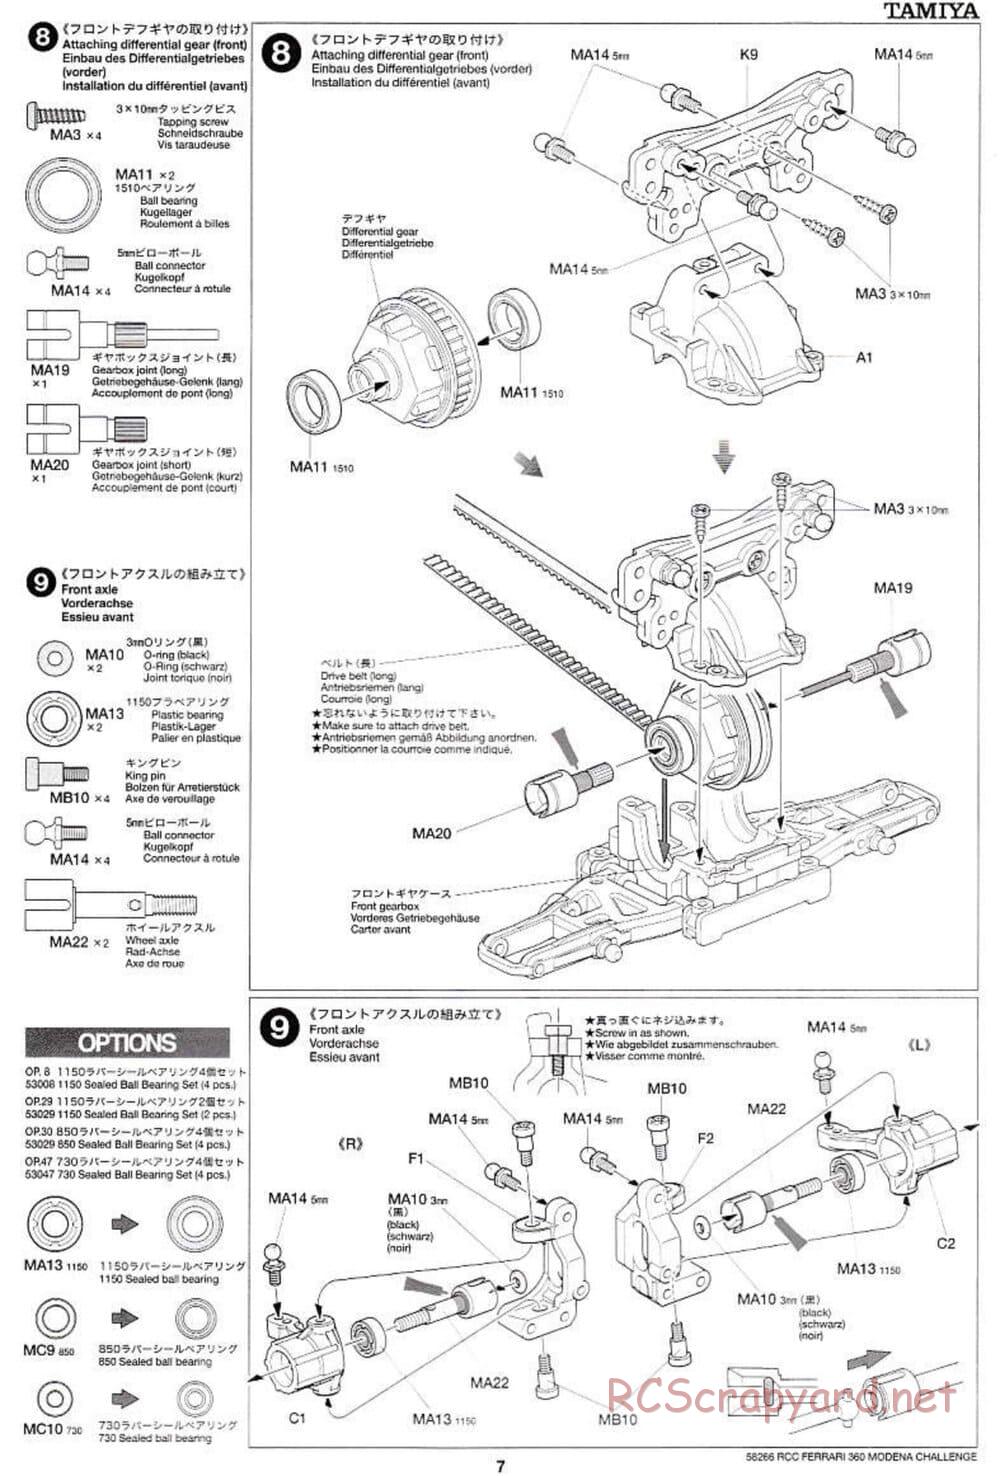 Tamiya - Ferrari 360 Modena Challenge - TA-04 Chassis - Manual - Page 7